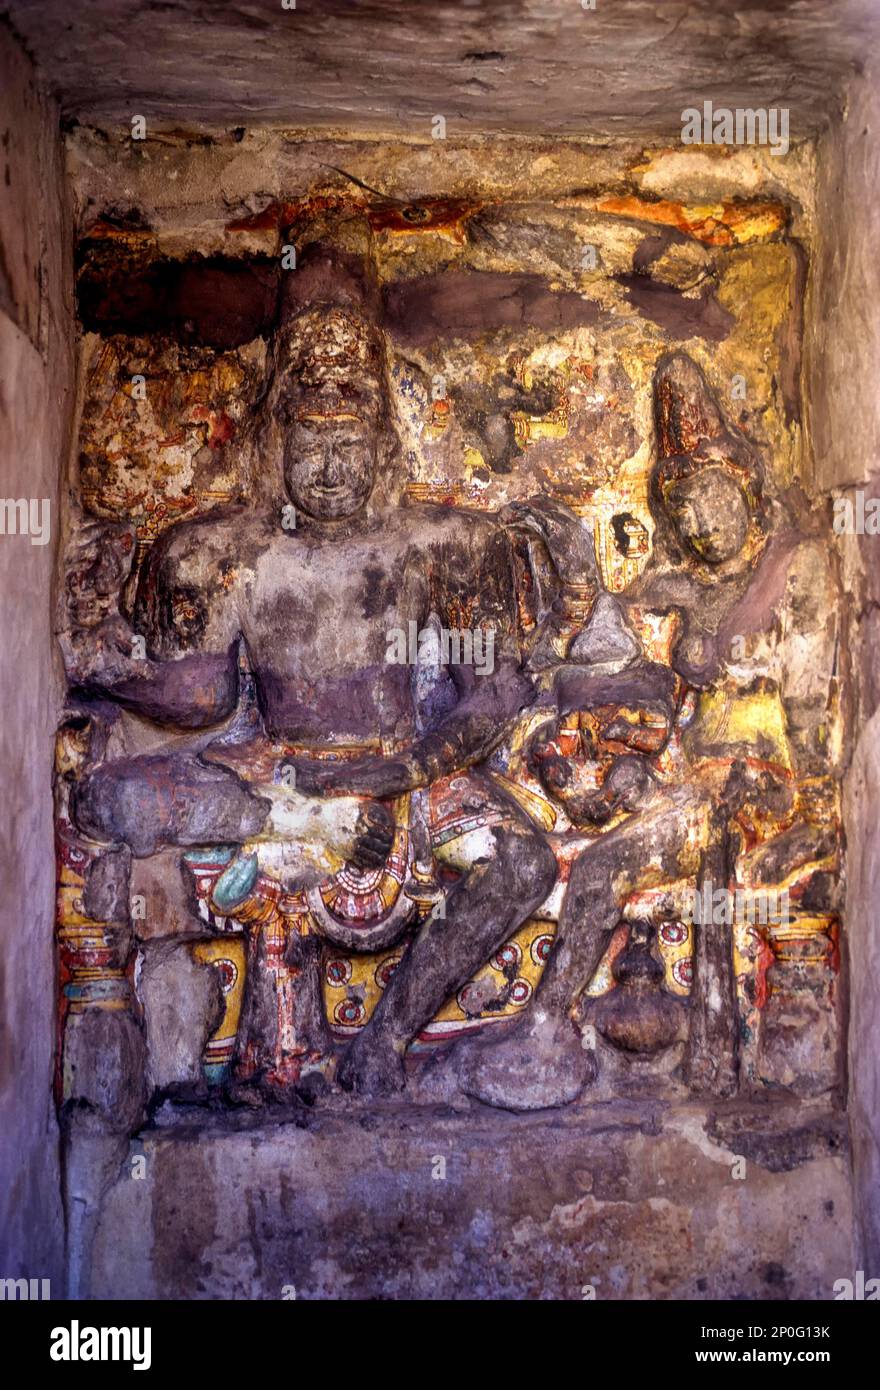 7th Siva et Parvathi sculpture dans le temple Kailasanathar à Kancheepuram Kanchipuram, Tamil Nadu, Inde du Sud, Inde, Asie Banque D'Images